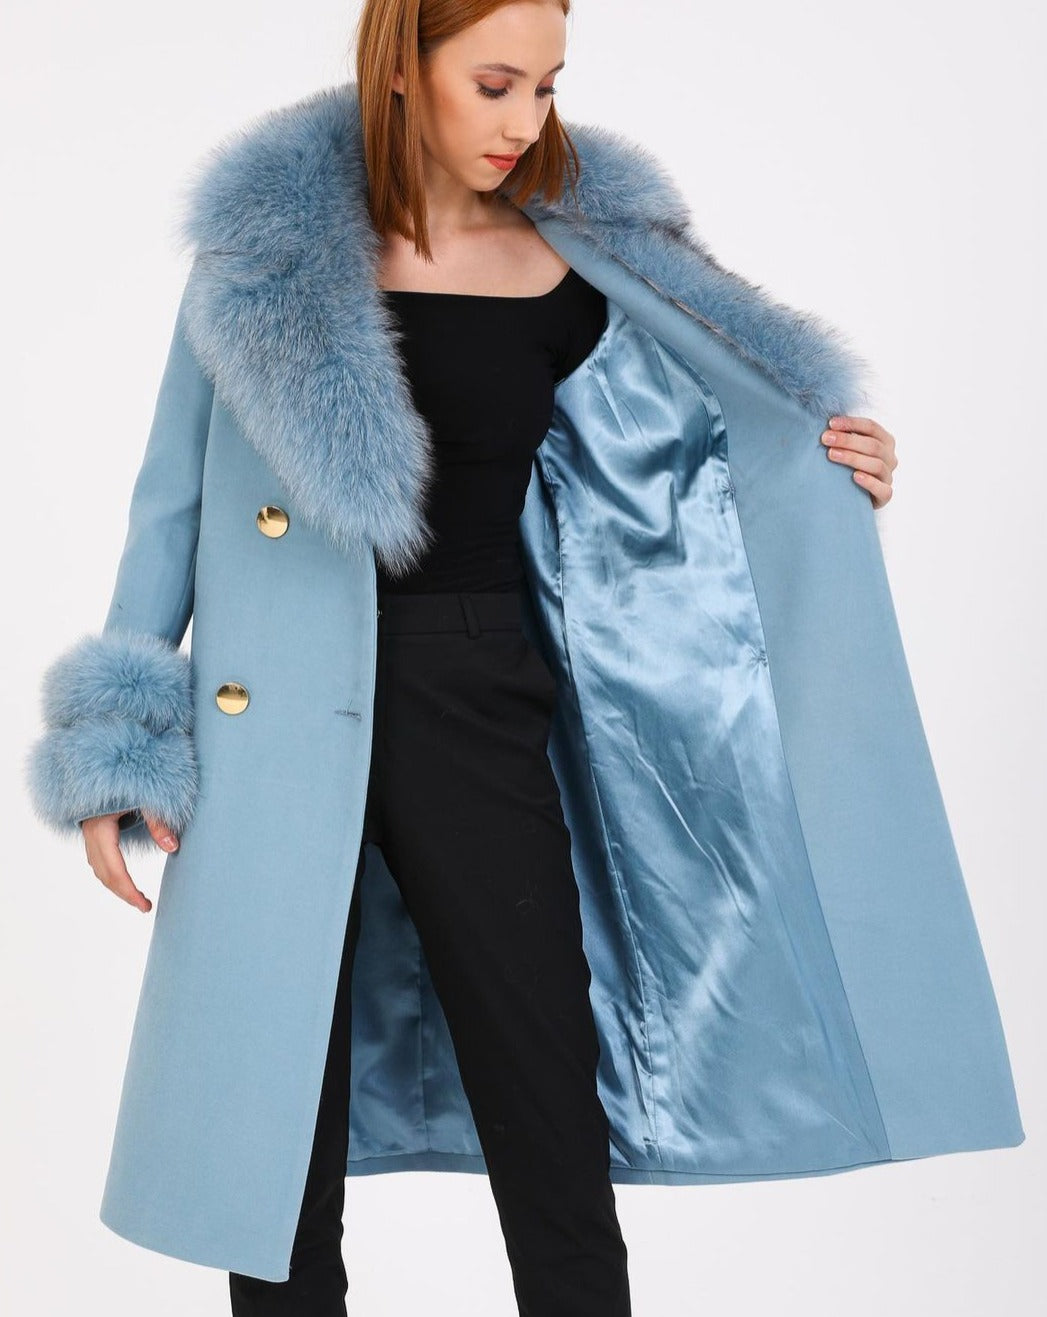 Versatile and Luxurious GLORIA LIGHT BLUE Cashmere Wool Coat